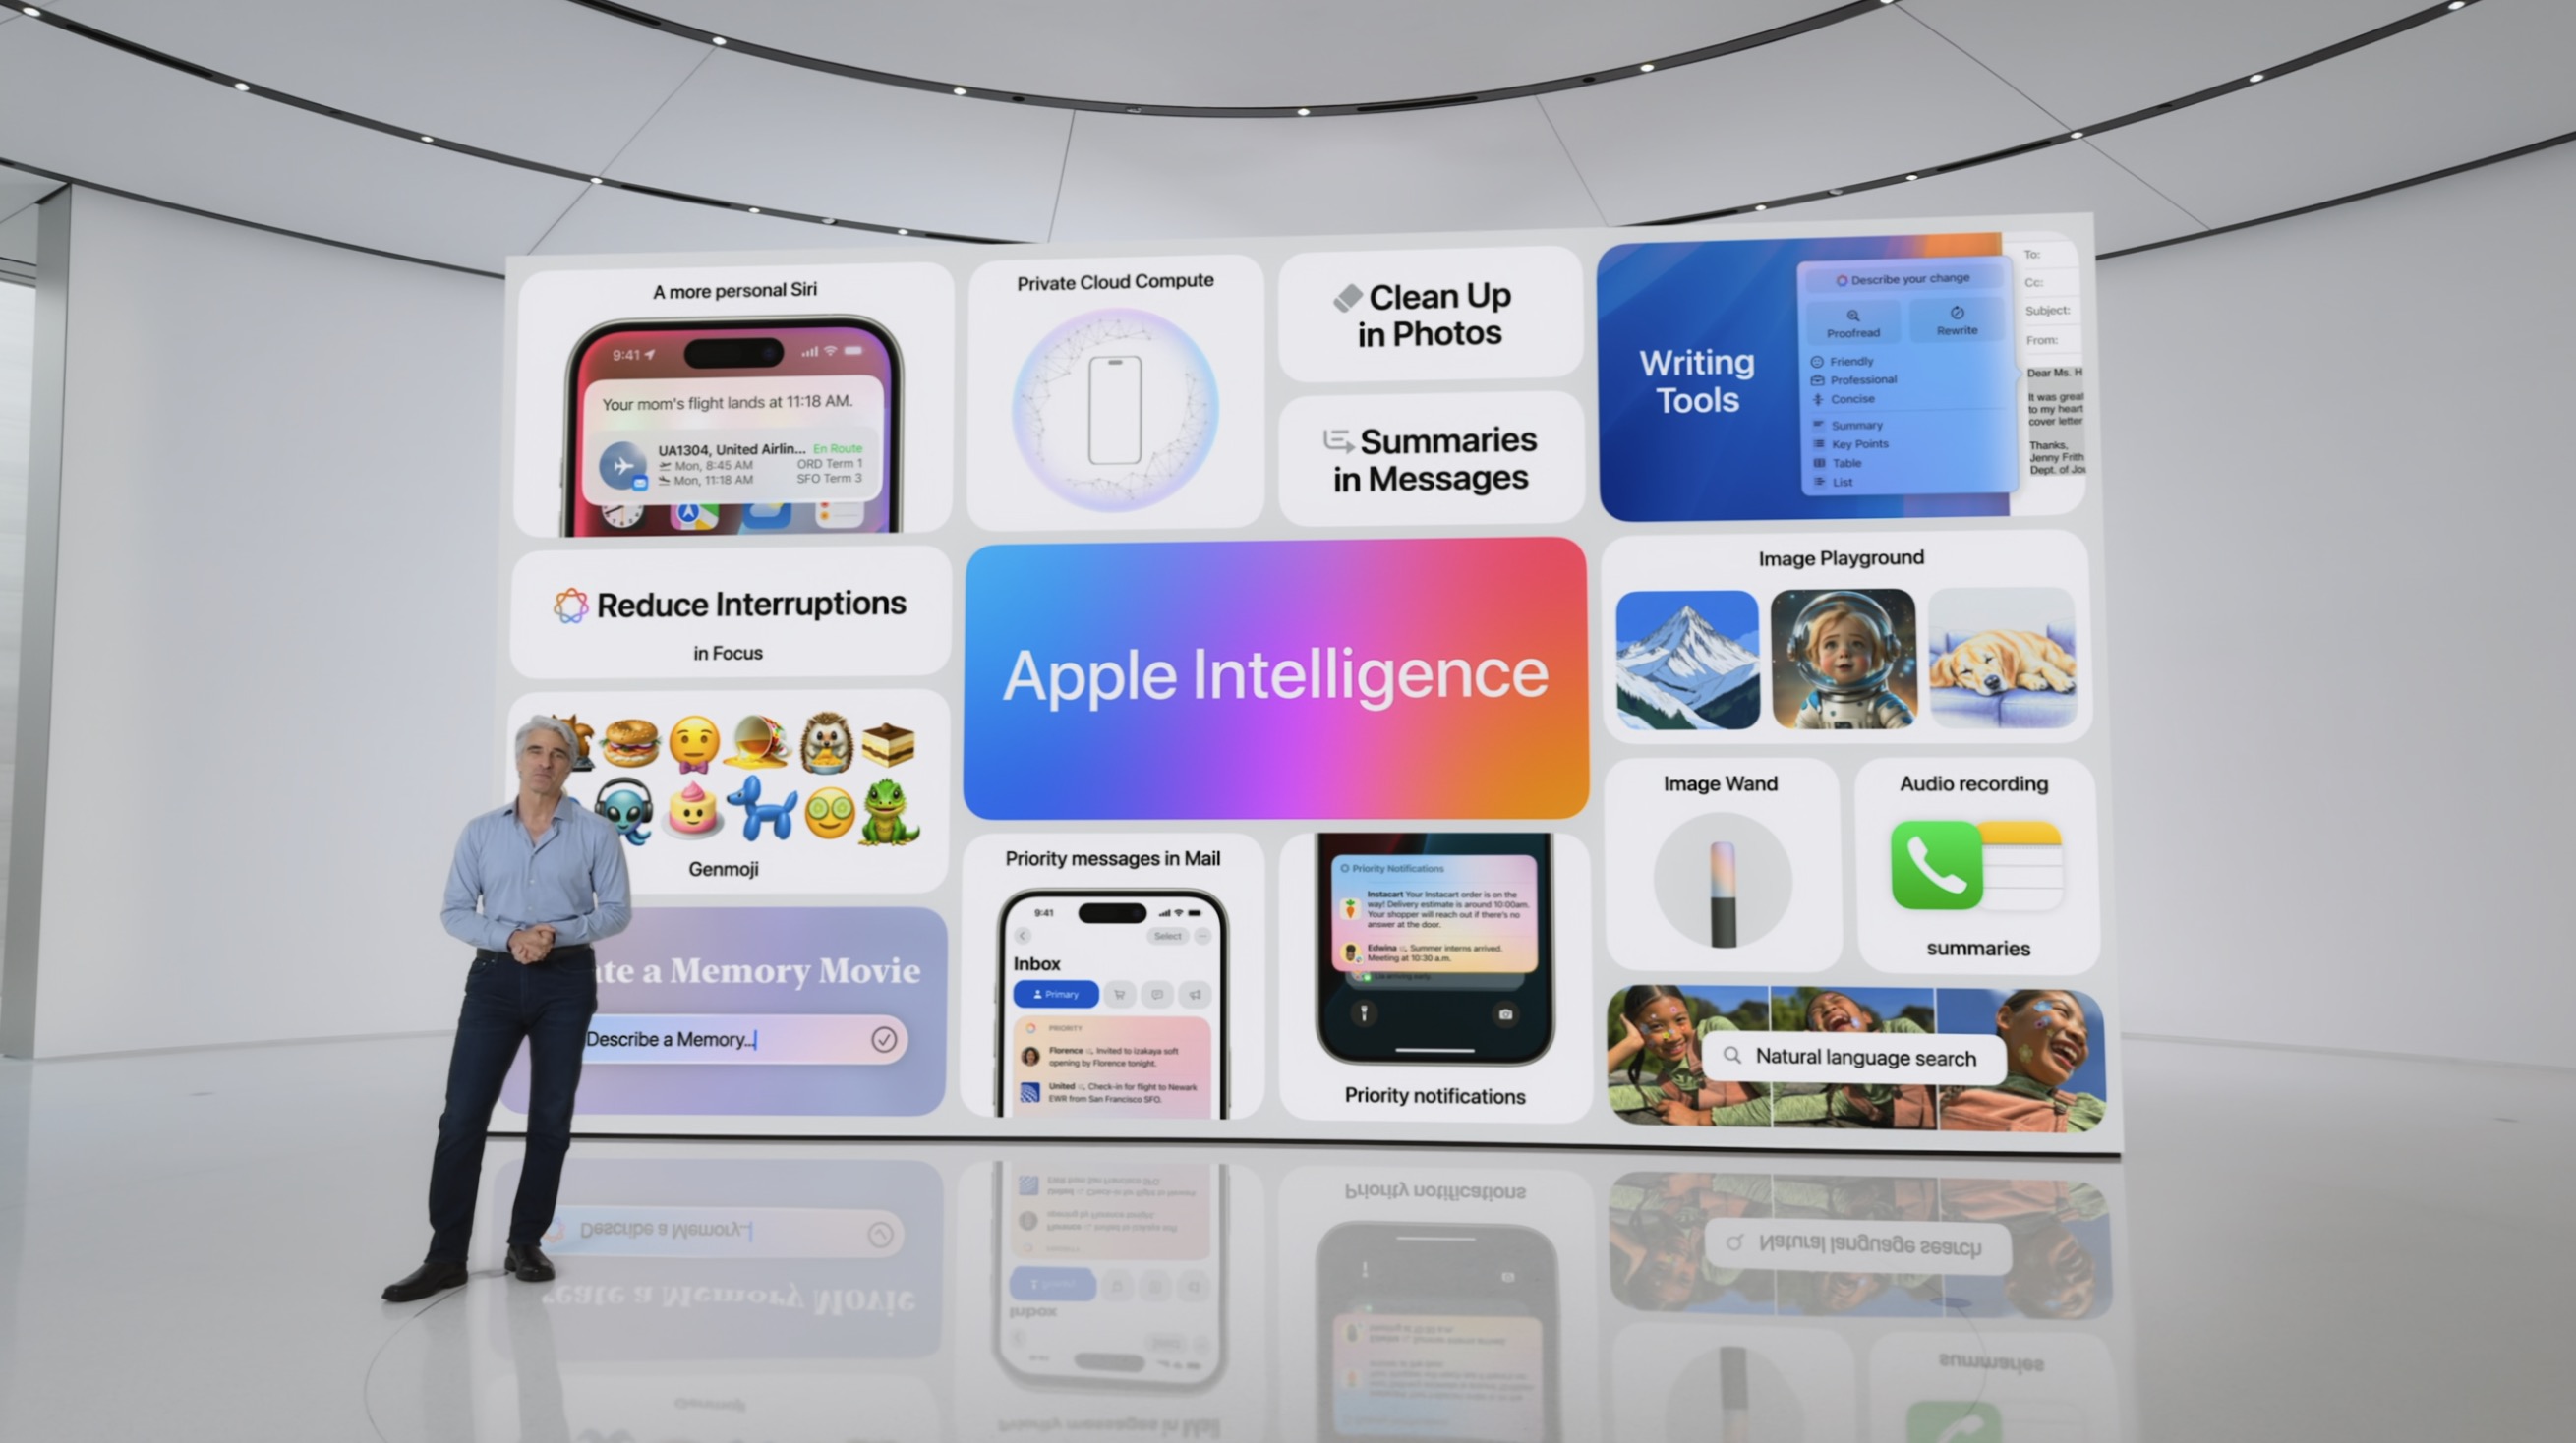 Apple Intelligence feature summary.